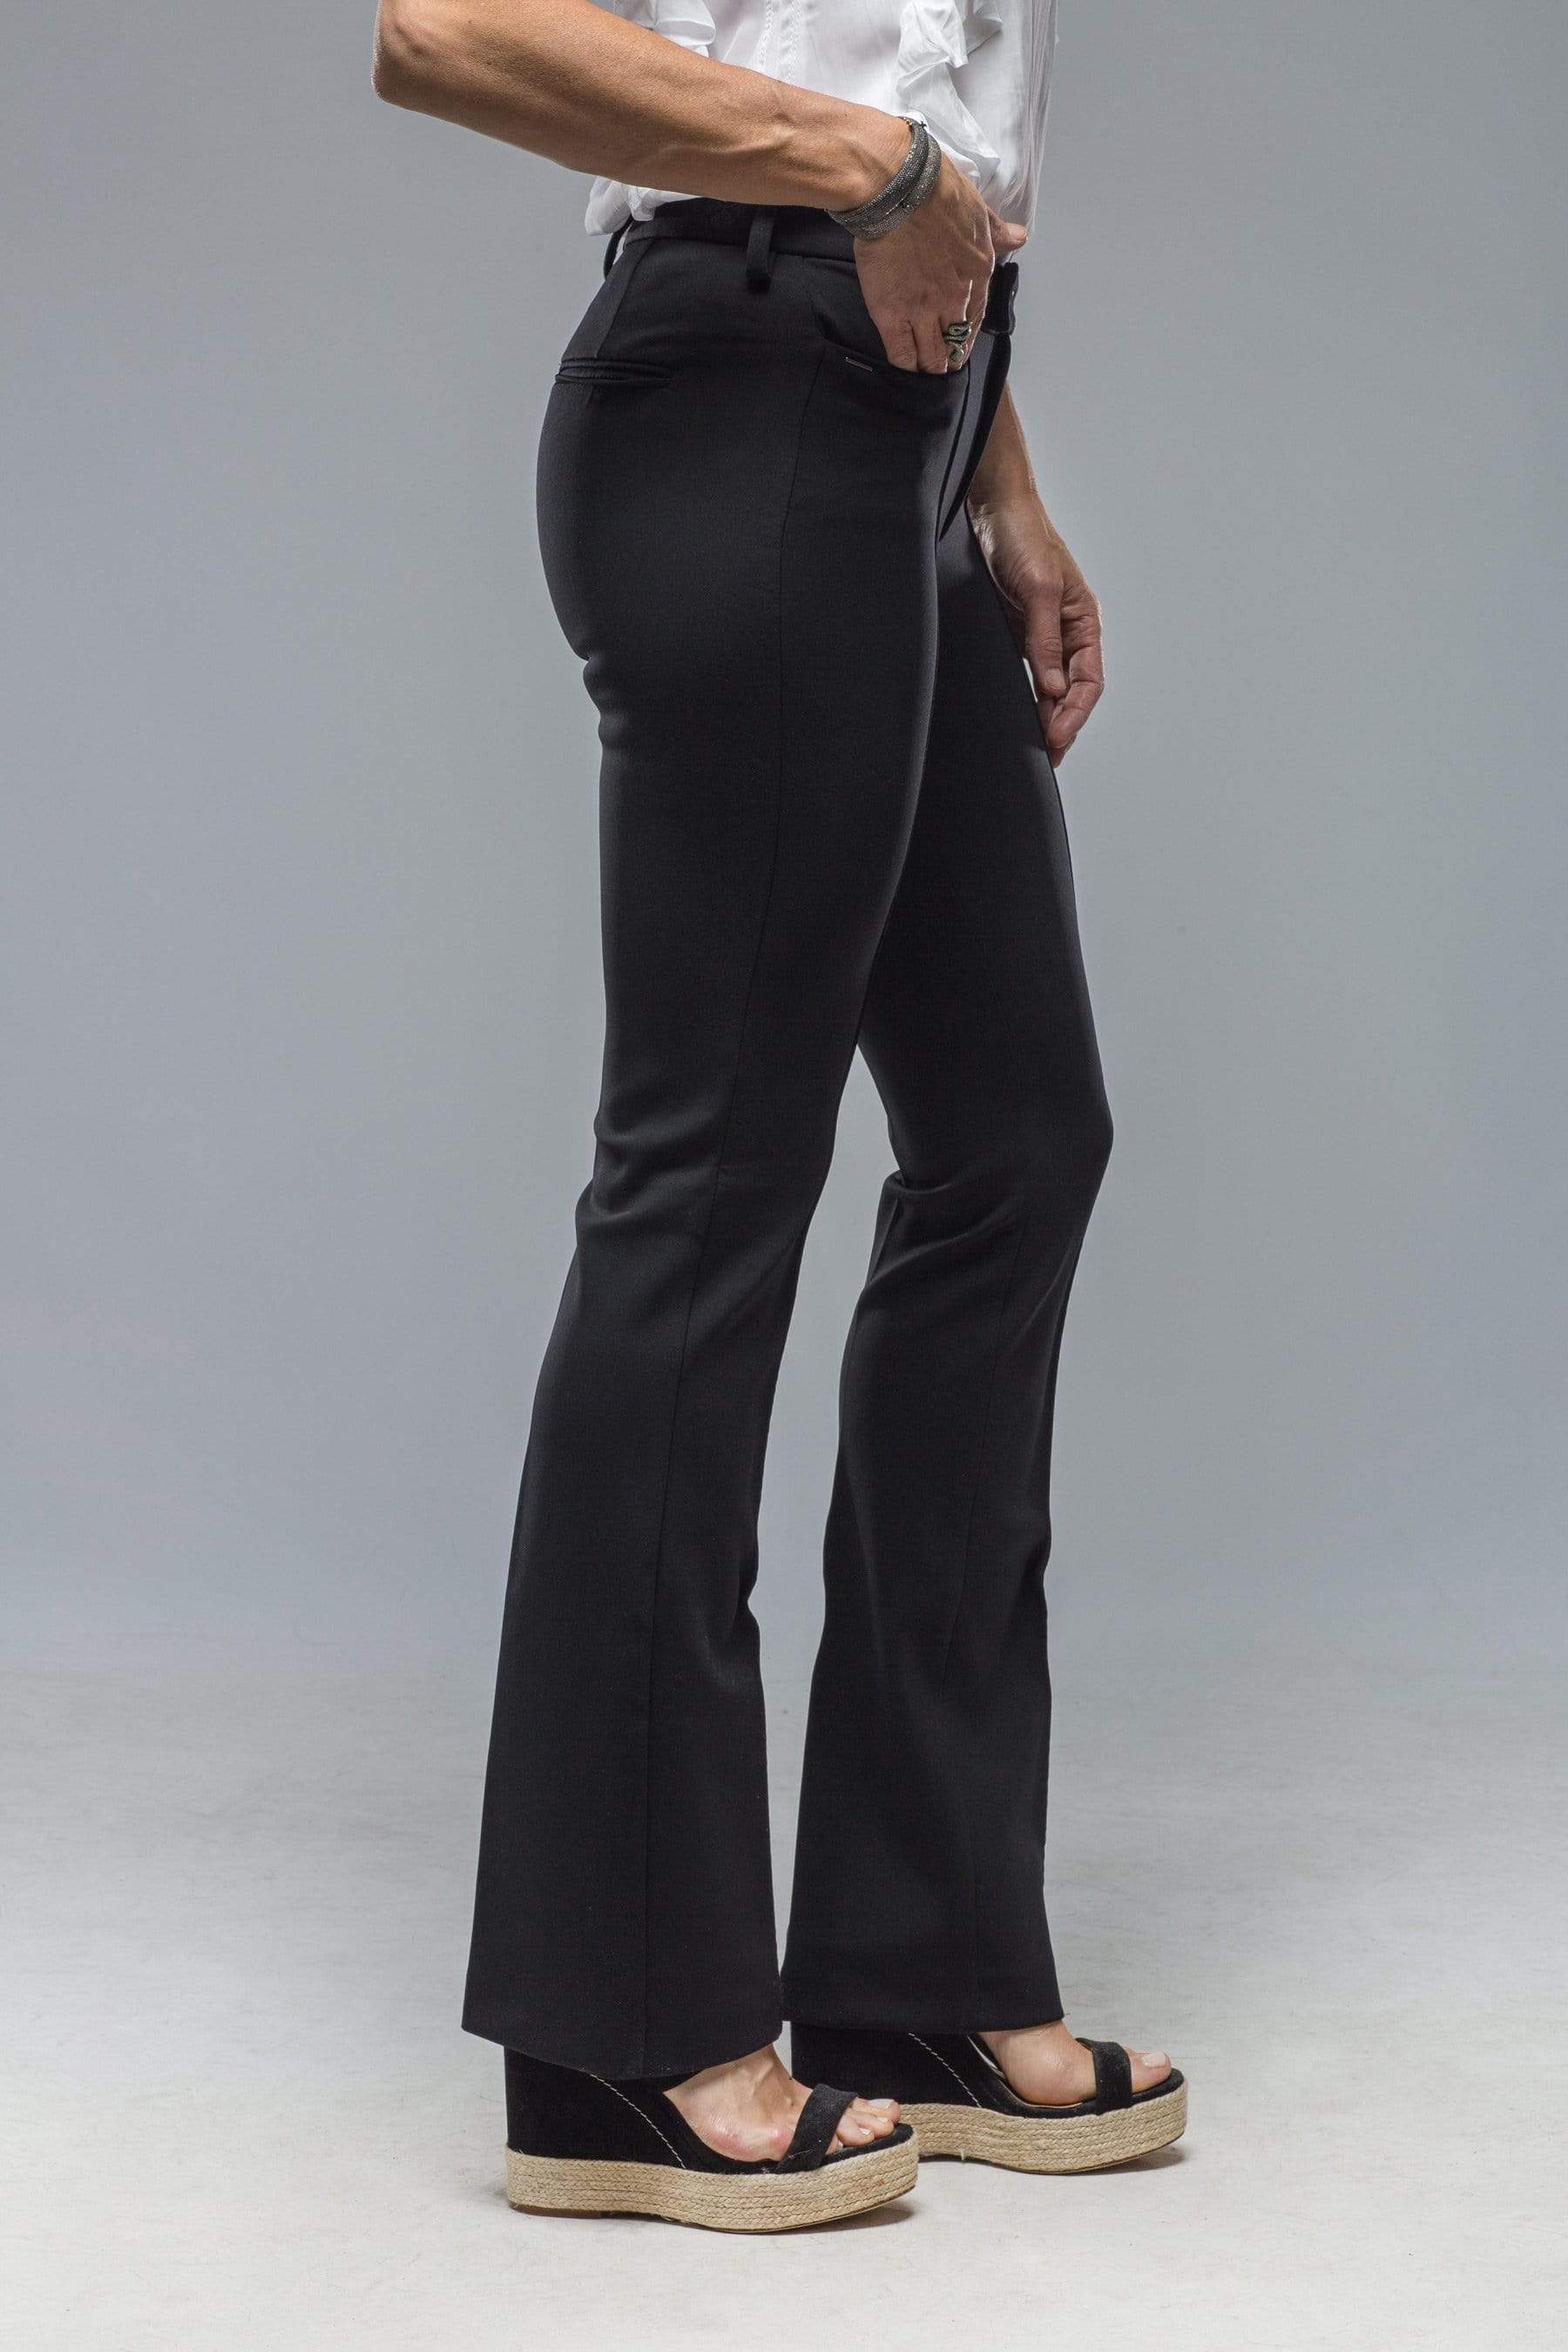 Vital Flares Leggings - Black – AXEL Clothing Ltd